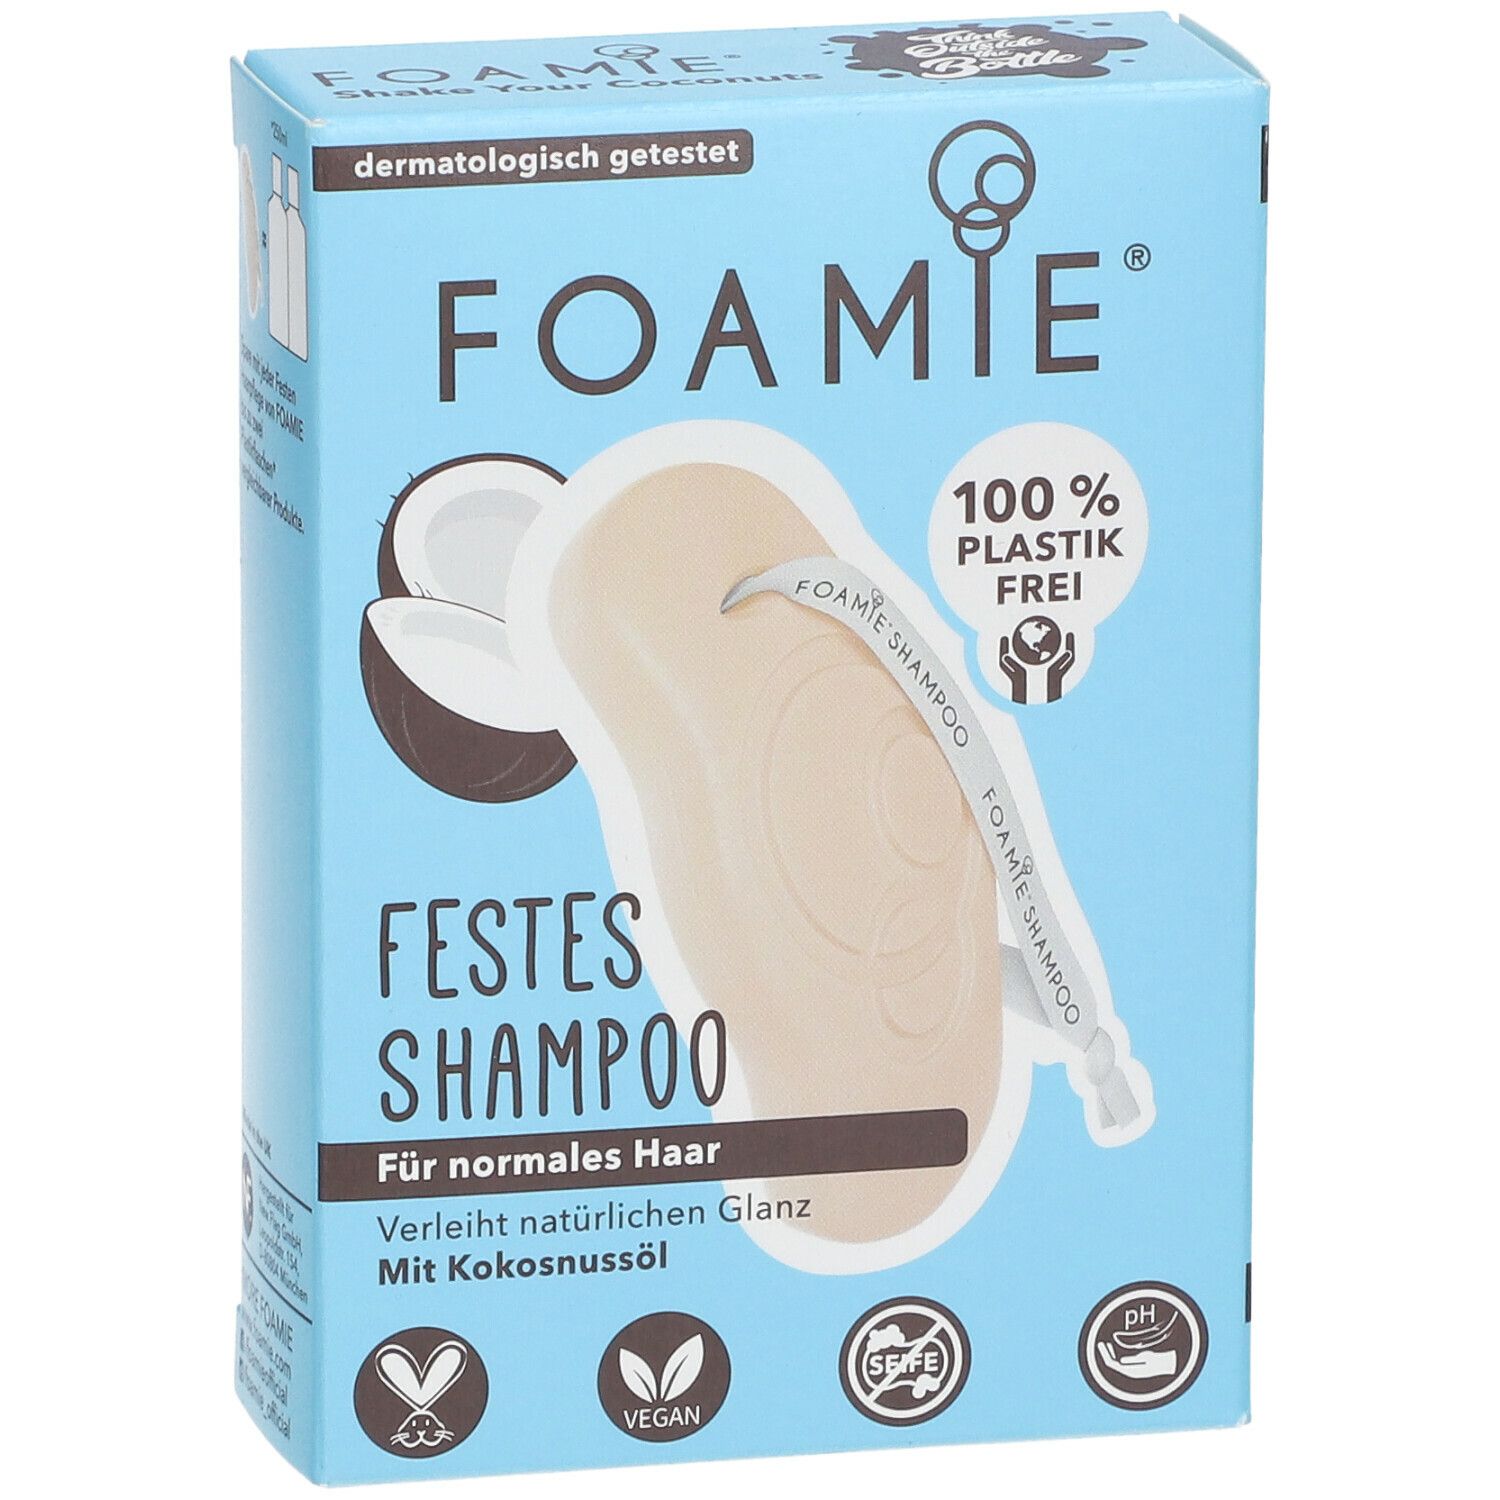 Festes - Shampoo SHOP Kokosnuss g APOTHEKE 80 FOAMIE®